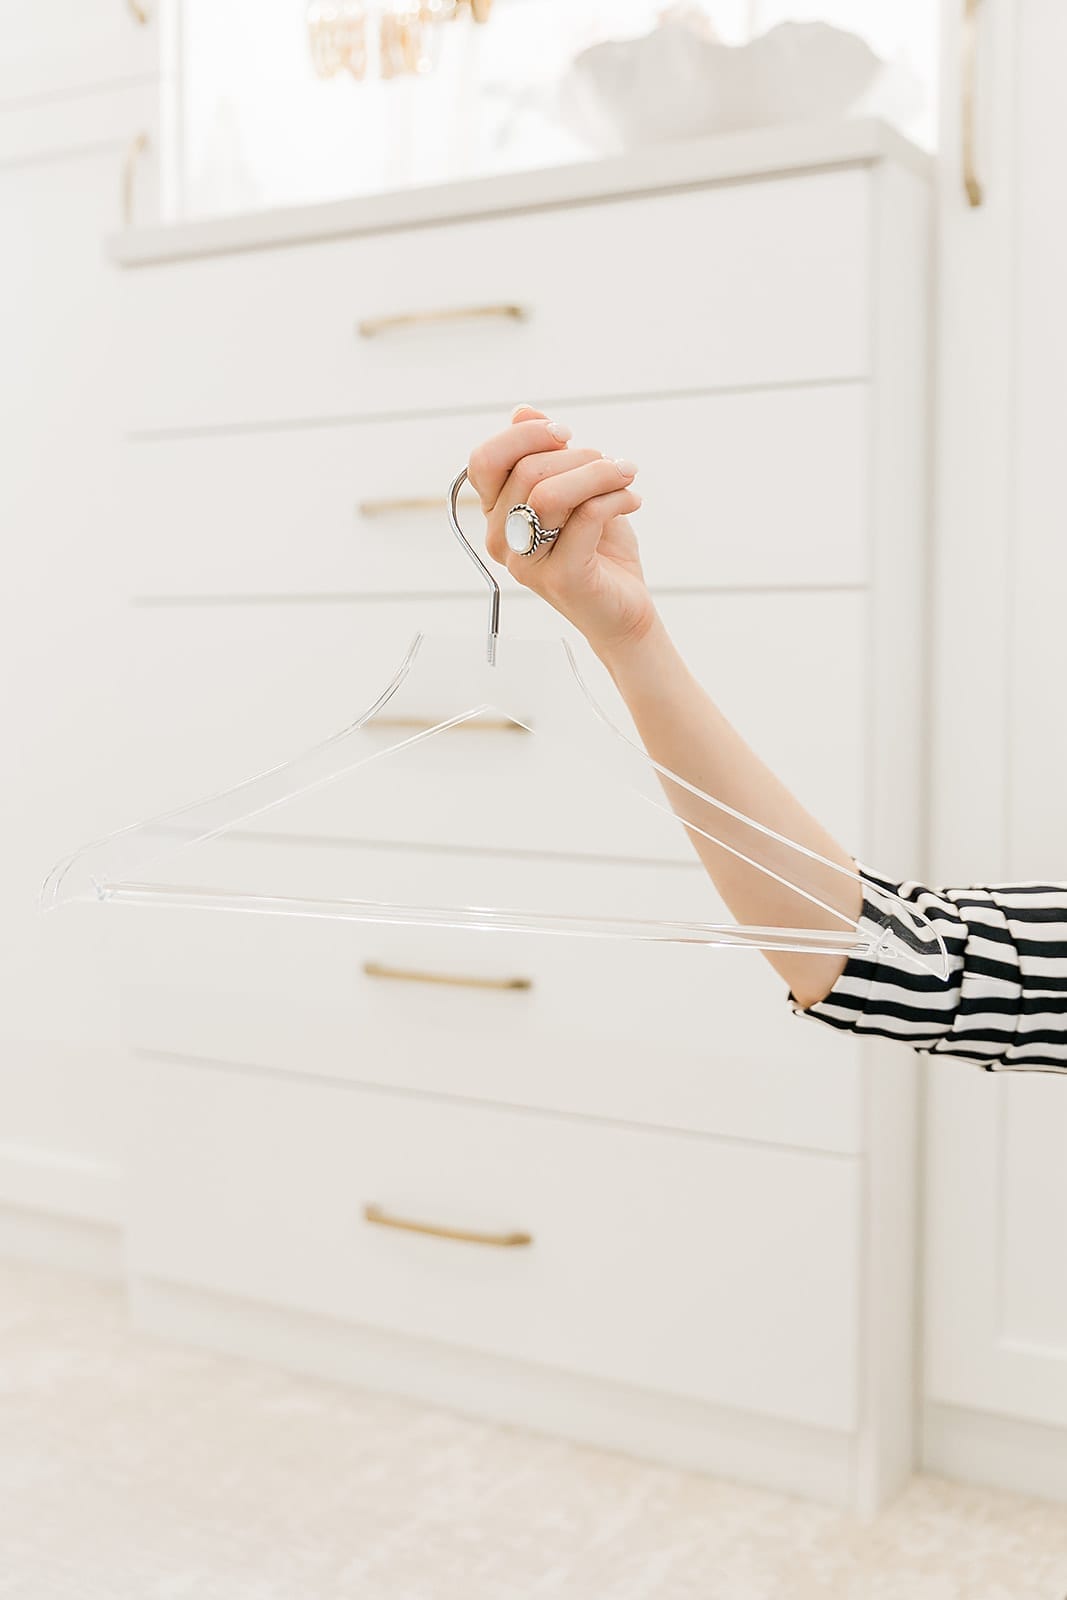 Acrylic hangers to make your closet look nice.